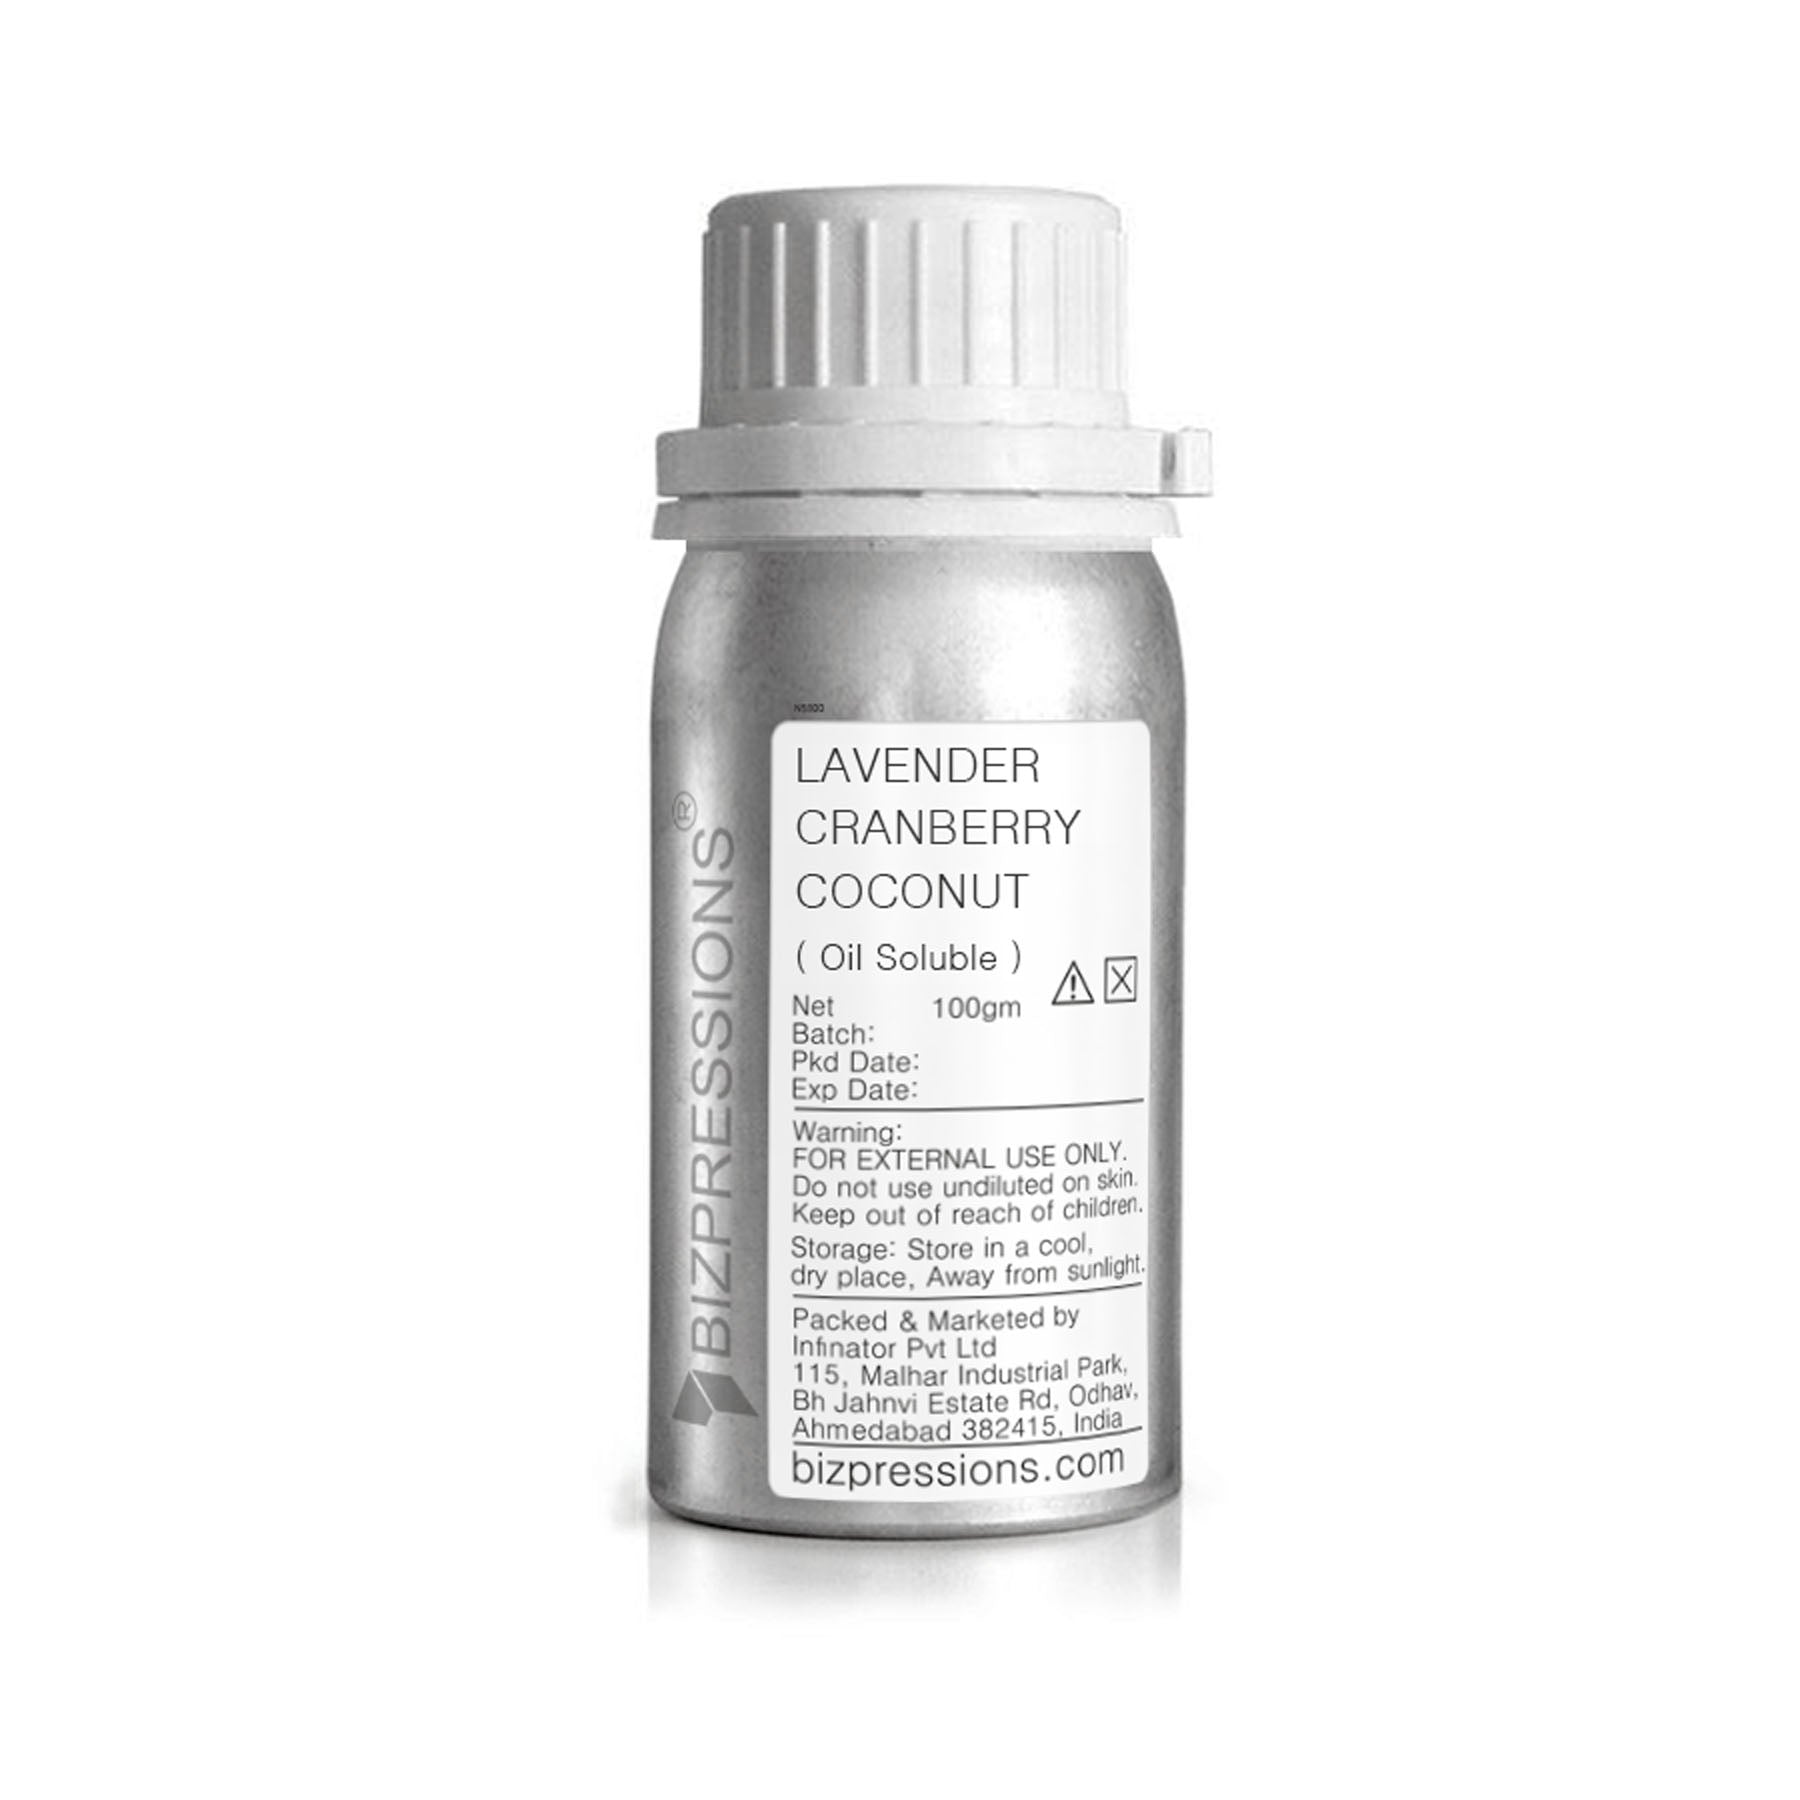 LAVENDER CRANBERRY COCONUT - Fragrance ( Oil Soluble ) - 100 gm